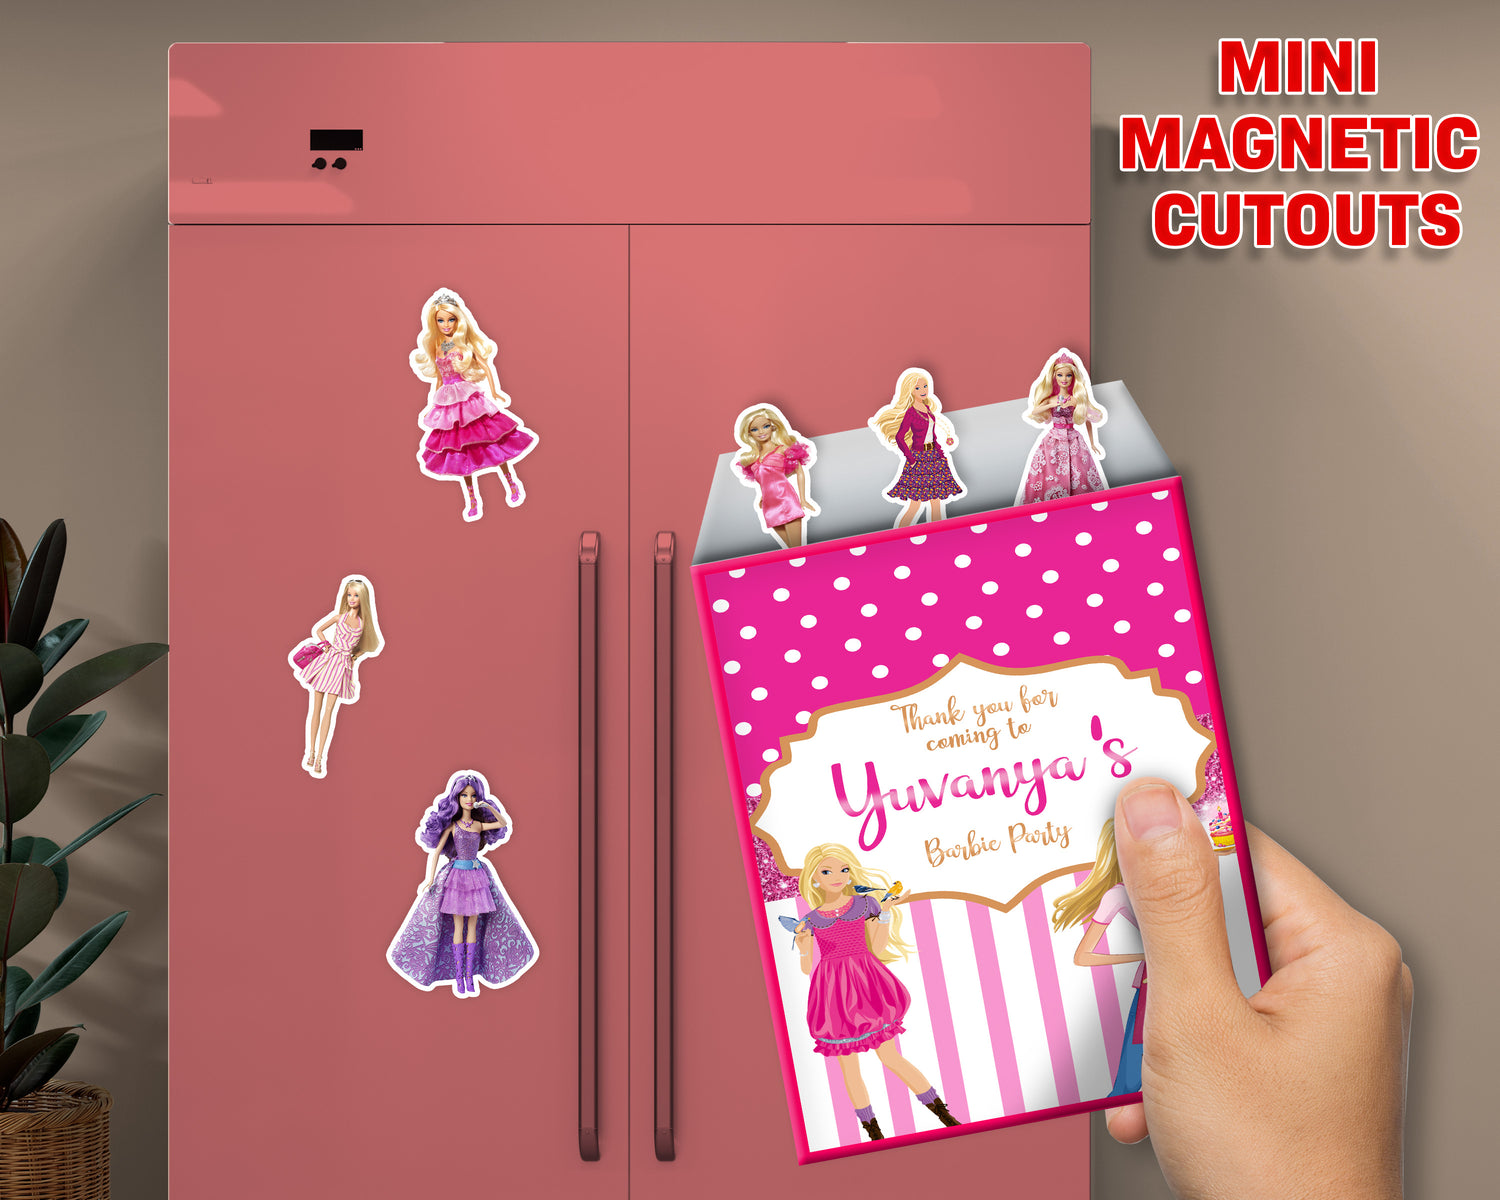 PSI Barbie theme Mini Magnetic Return Gift Pack